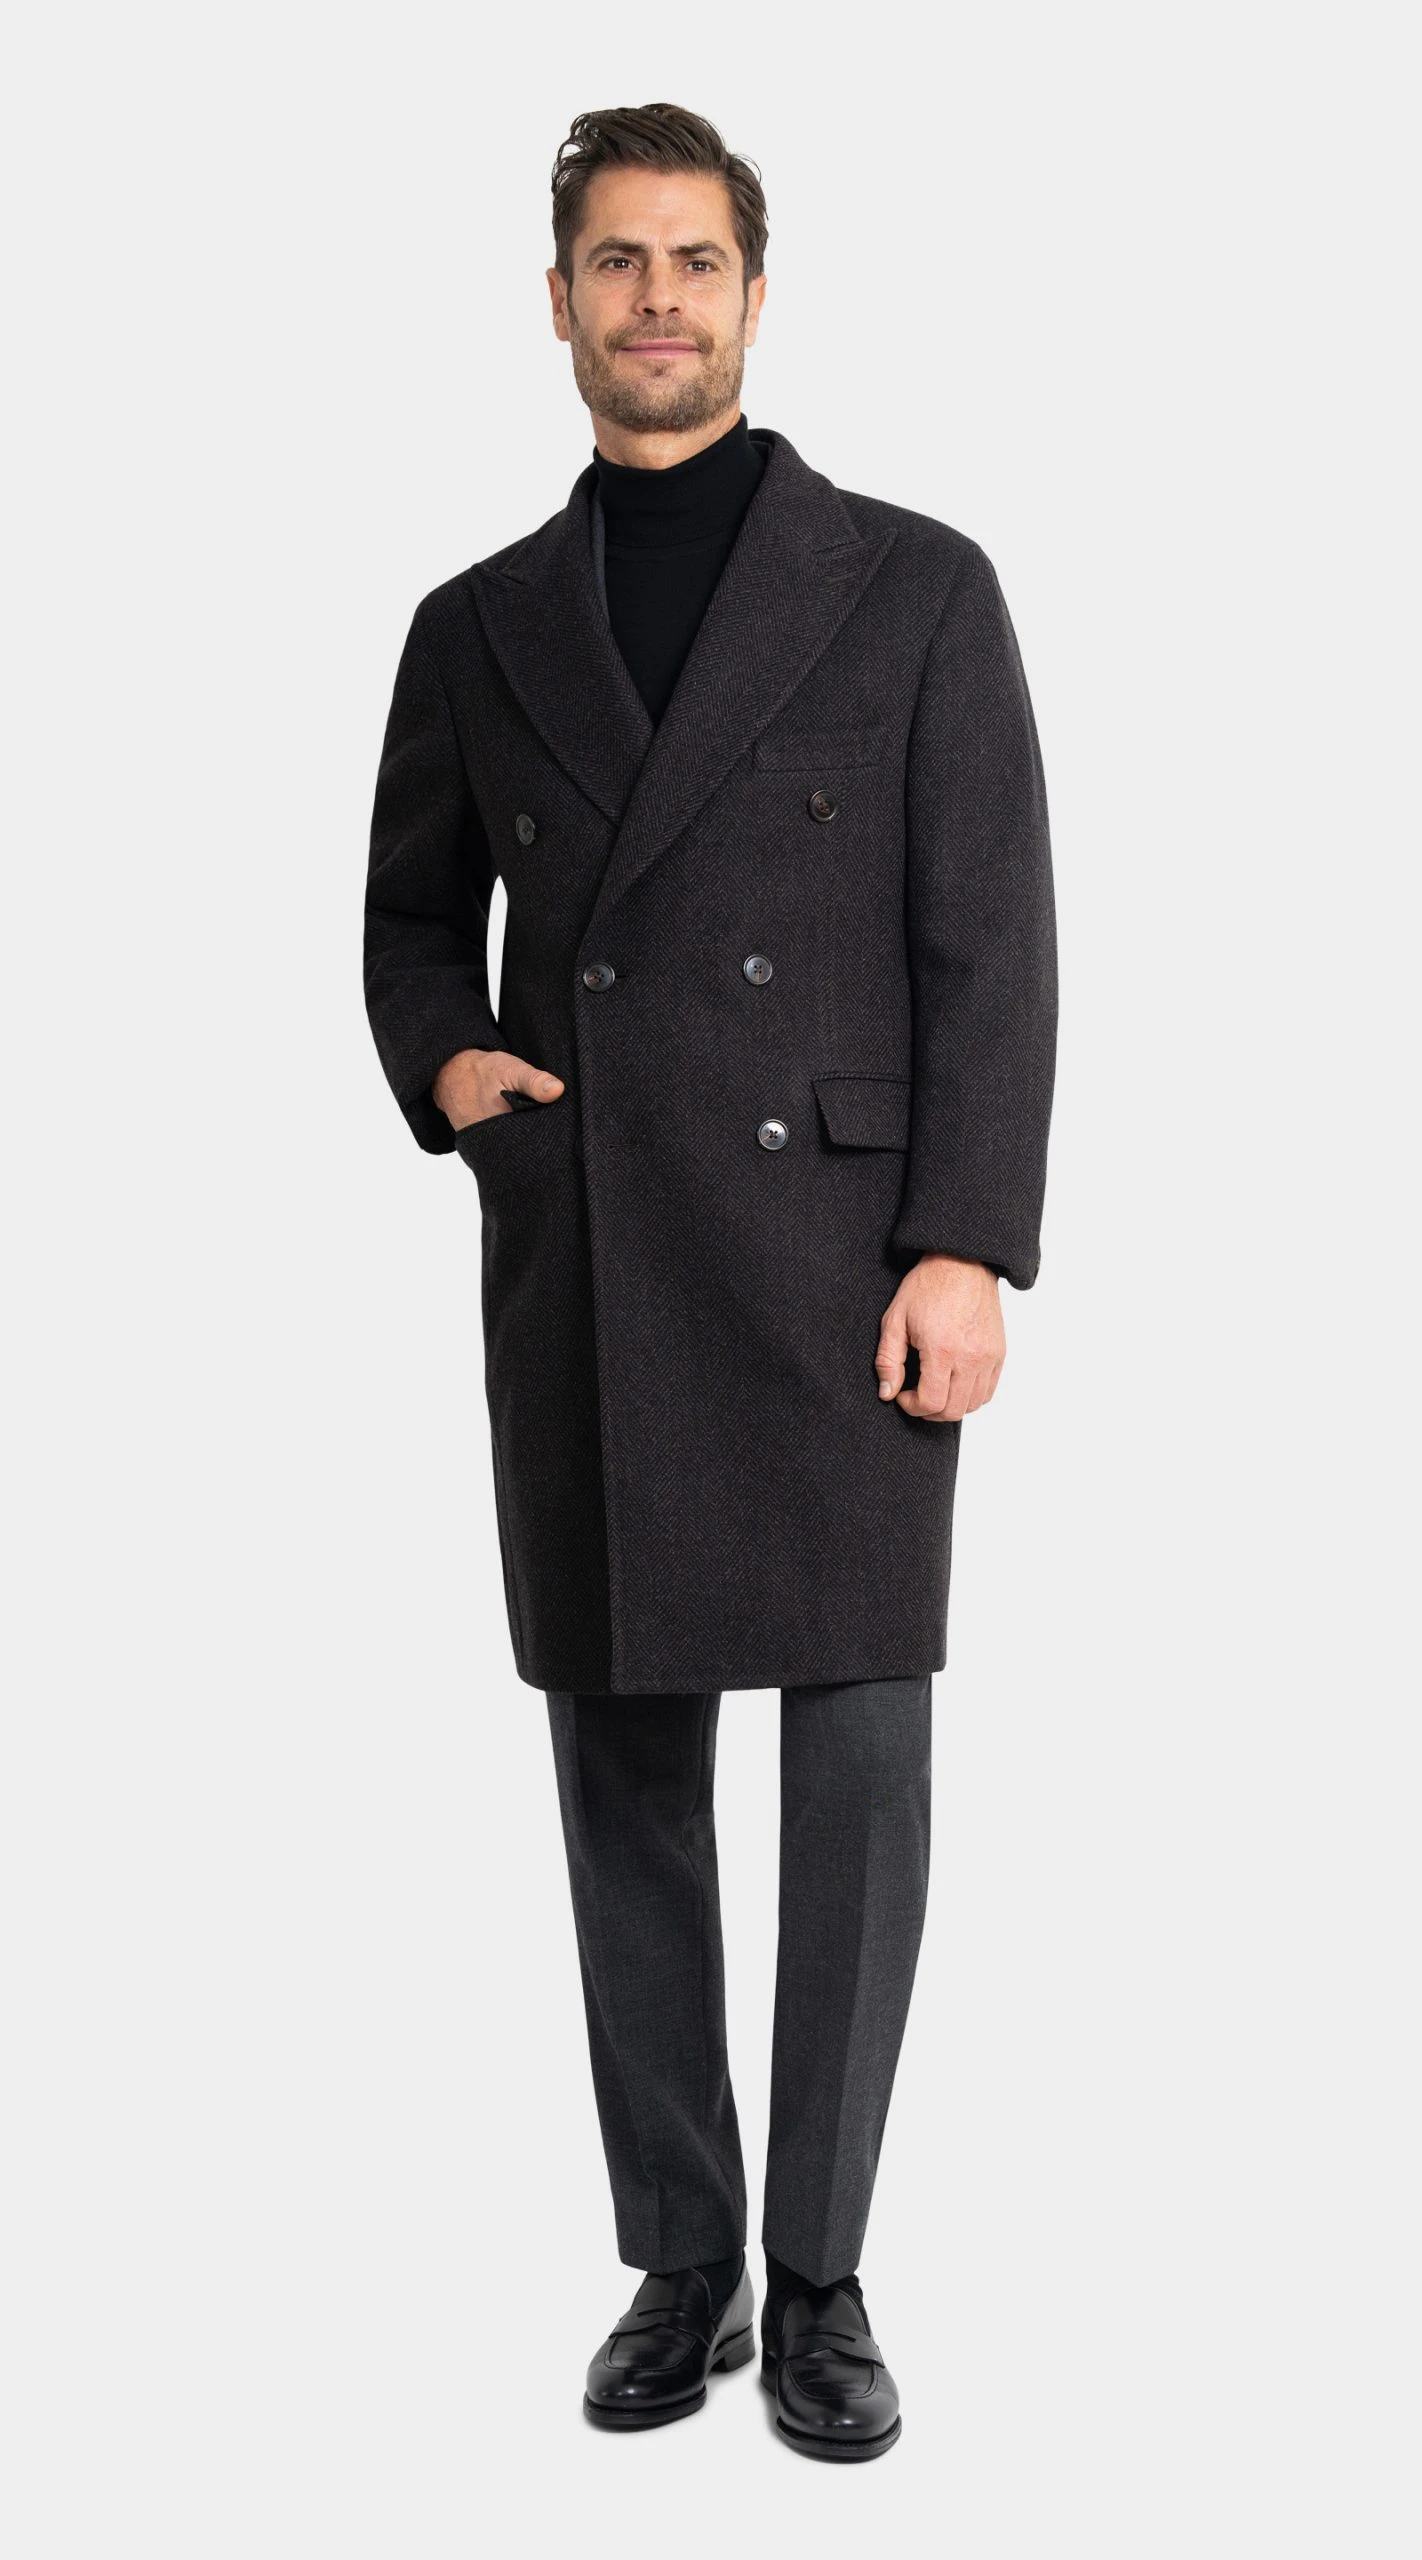 Brown Wool and Cashmere Herringbone Overcoat by mond of copenhagen